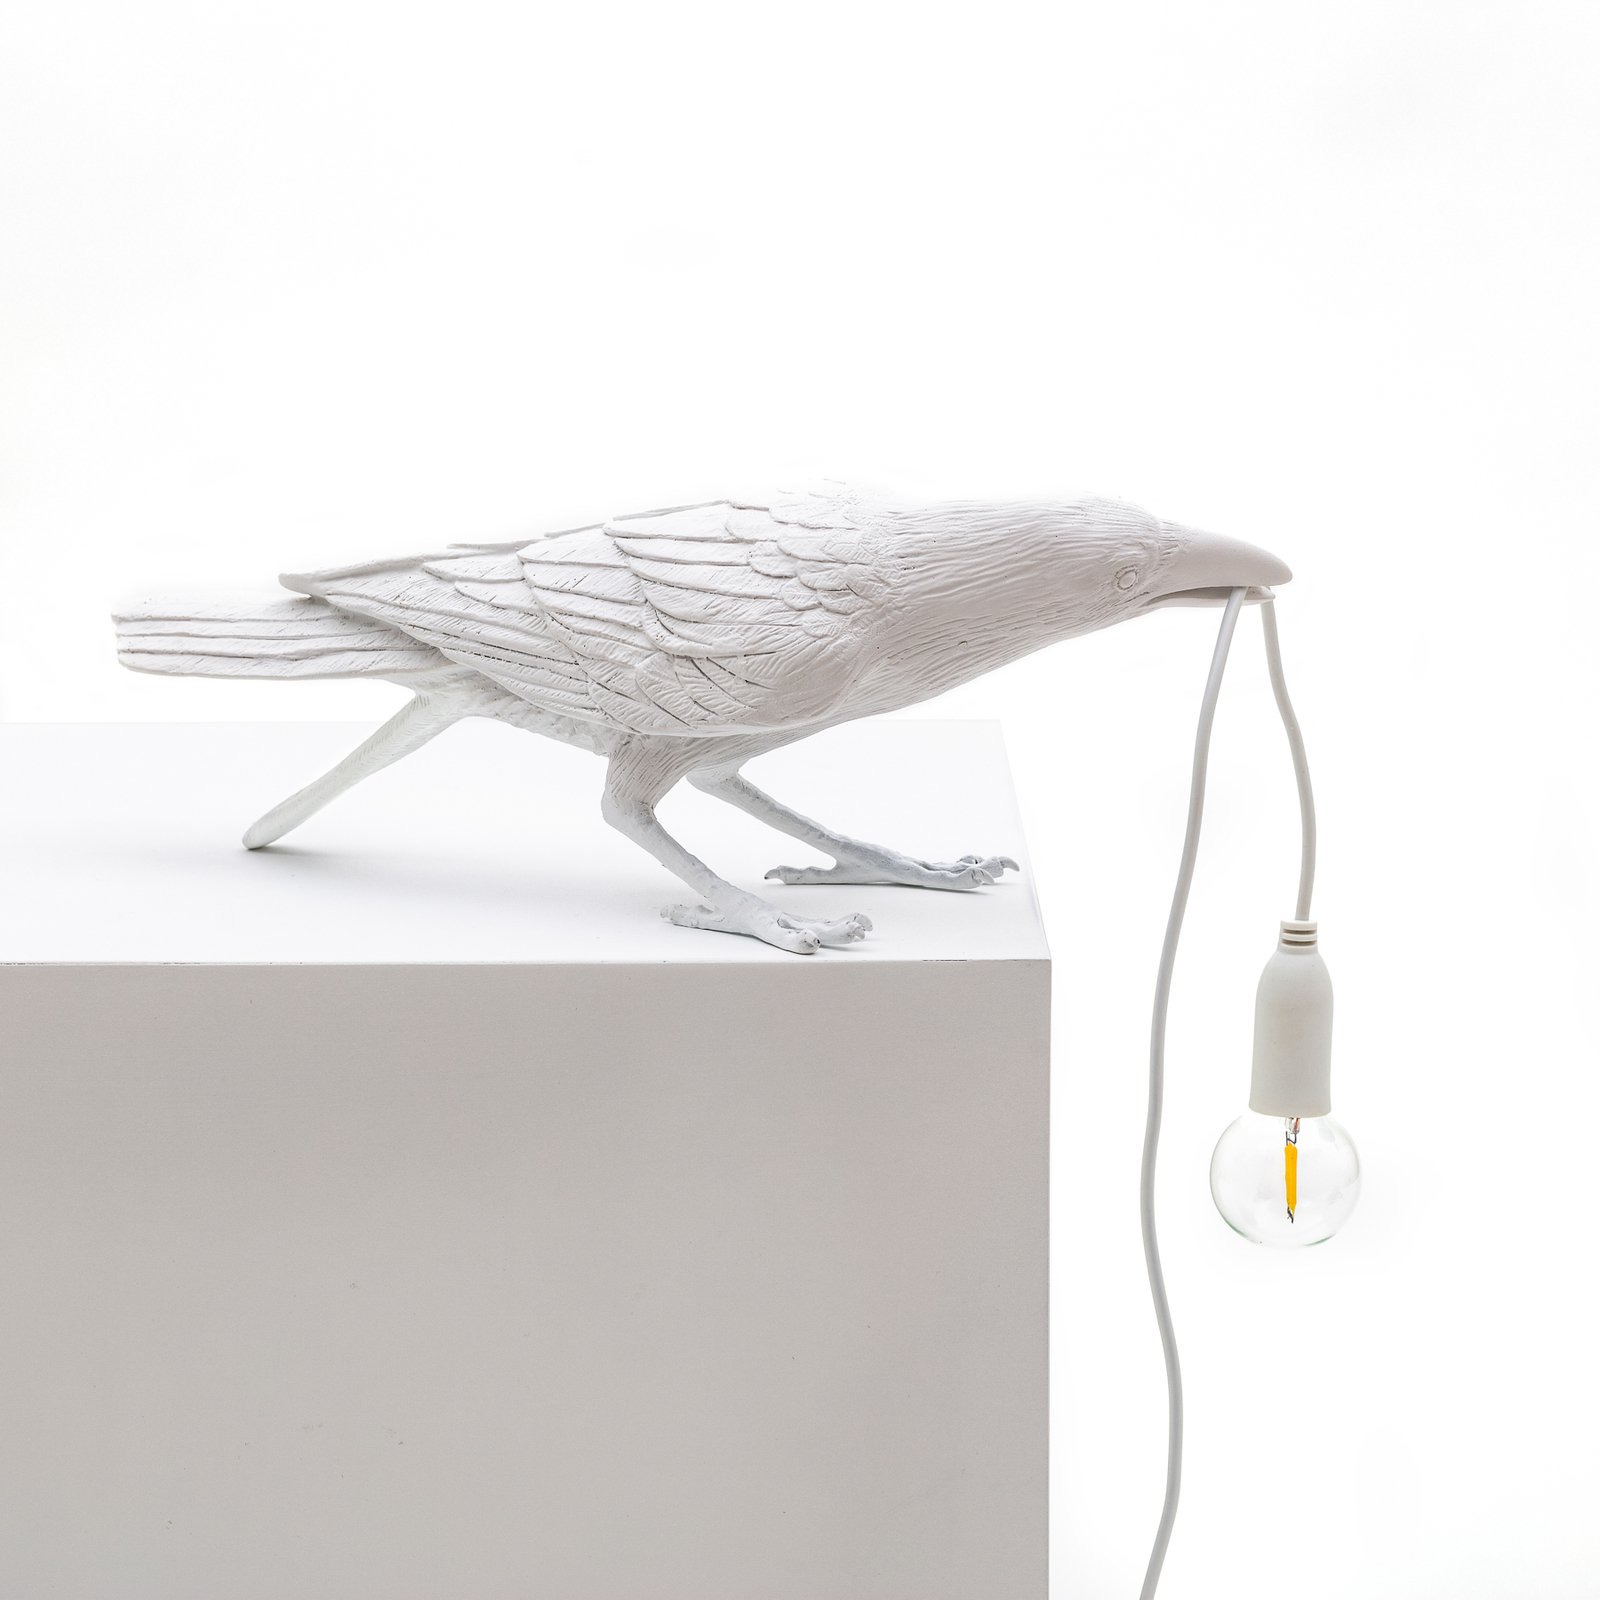 SELETTI Bird Lamp Candeeiro decorativo LED, brincar, branco